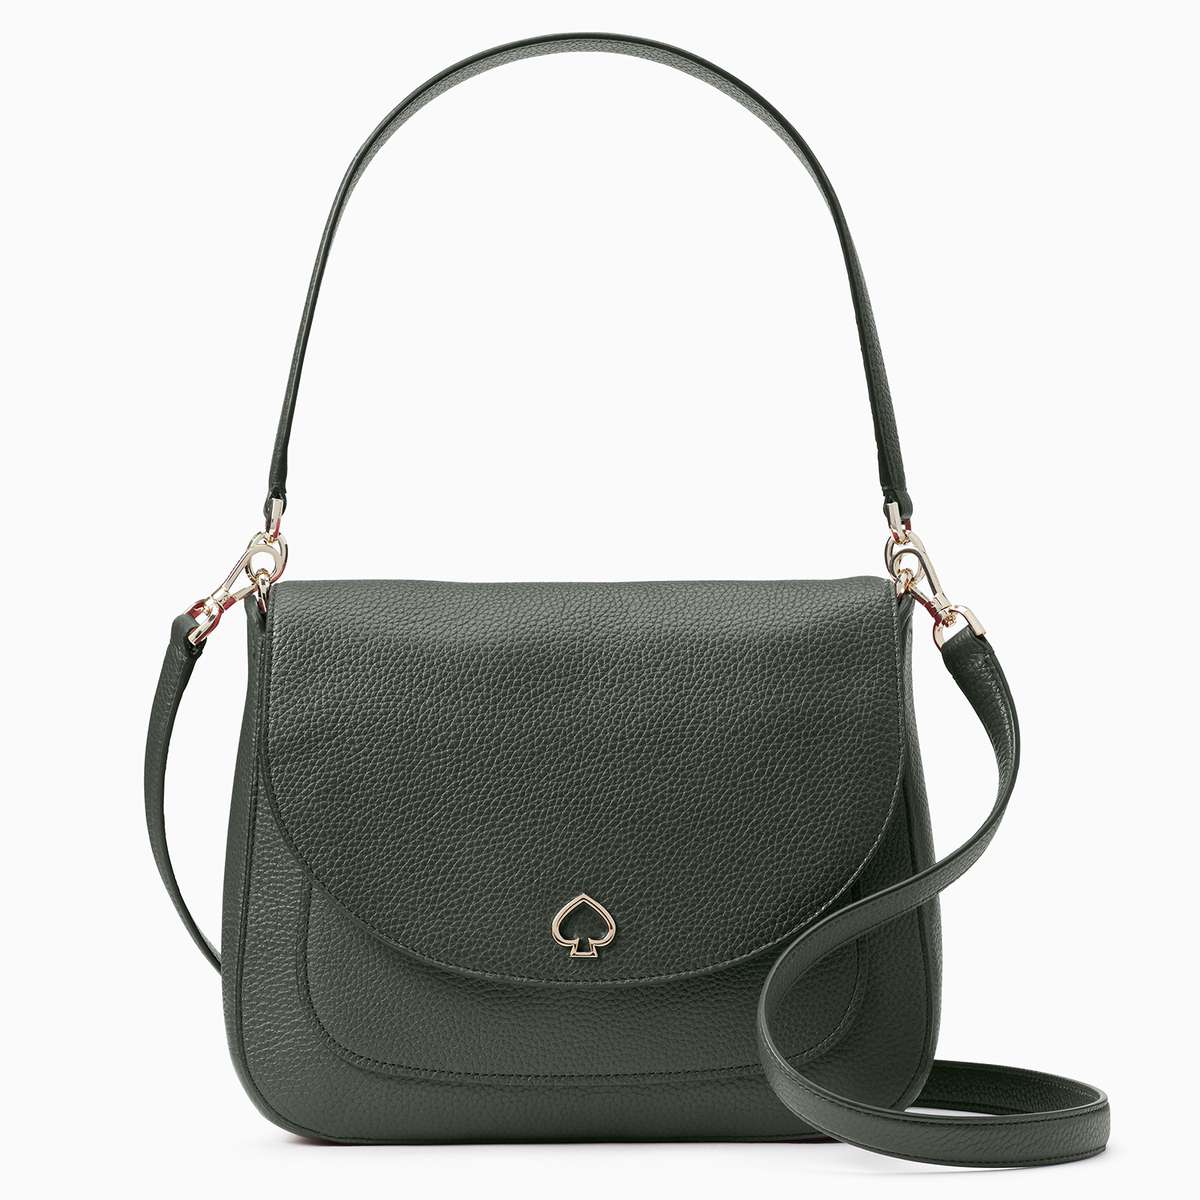 Dark green leather purse